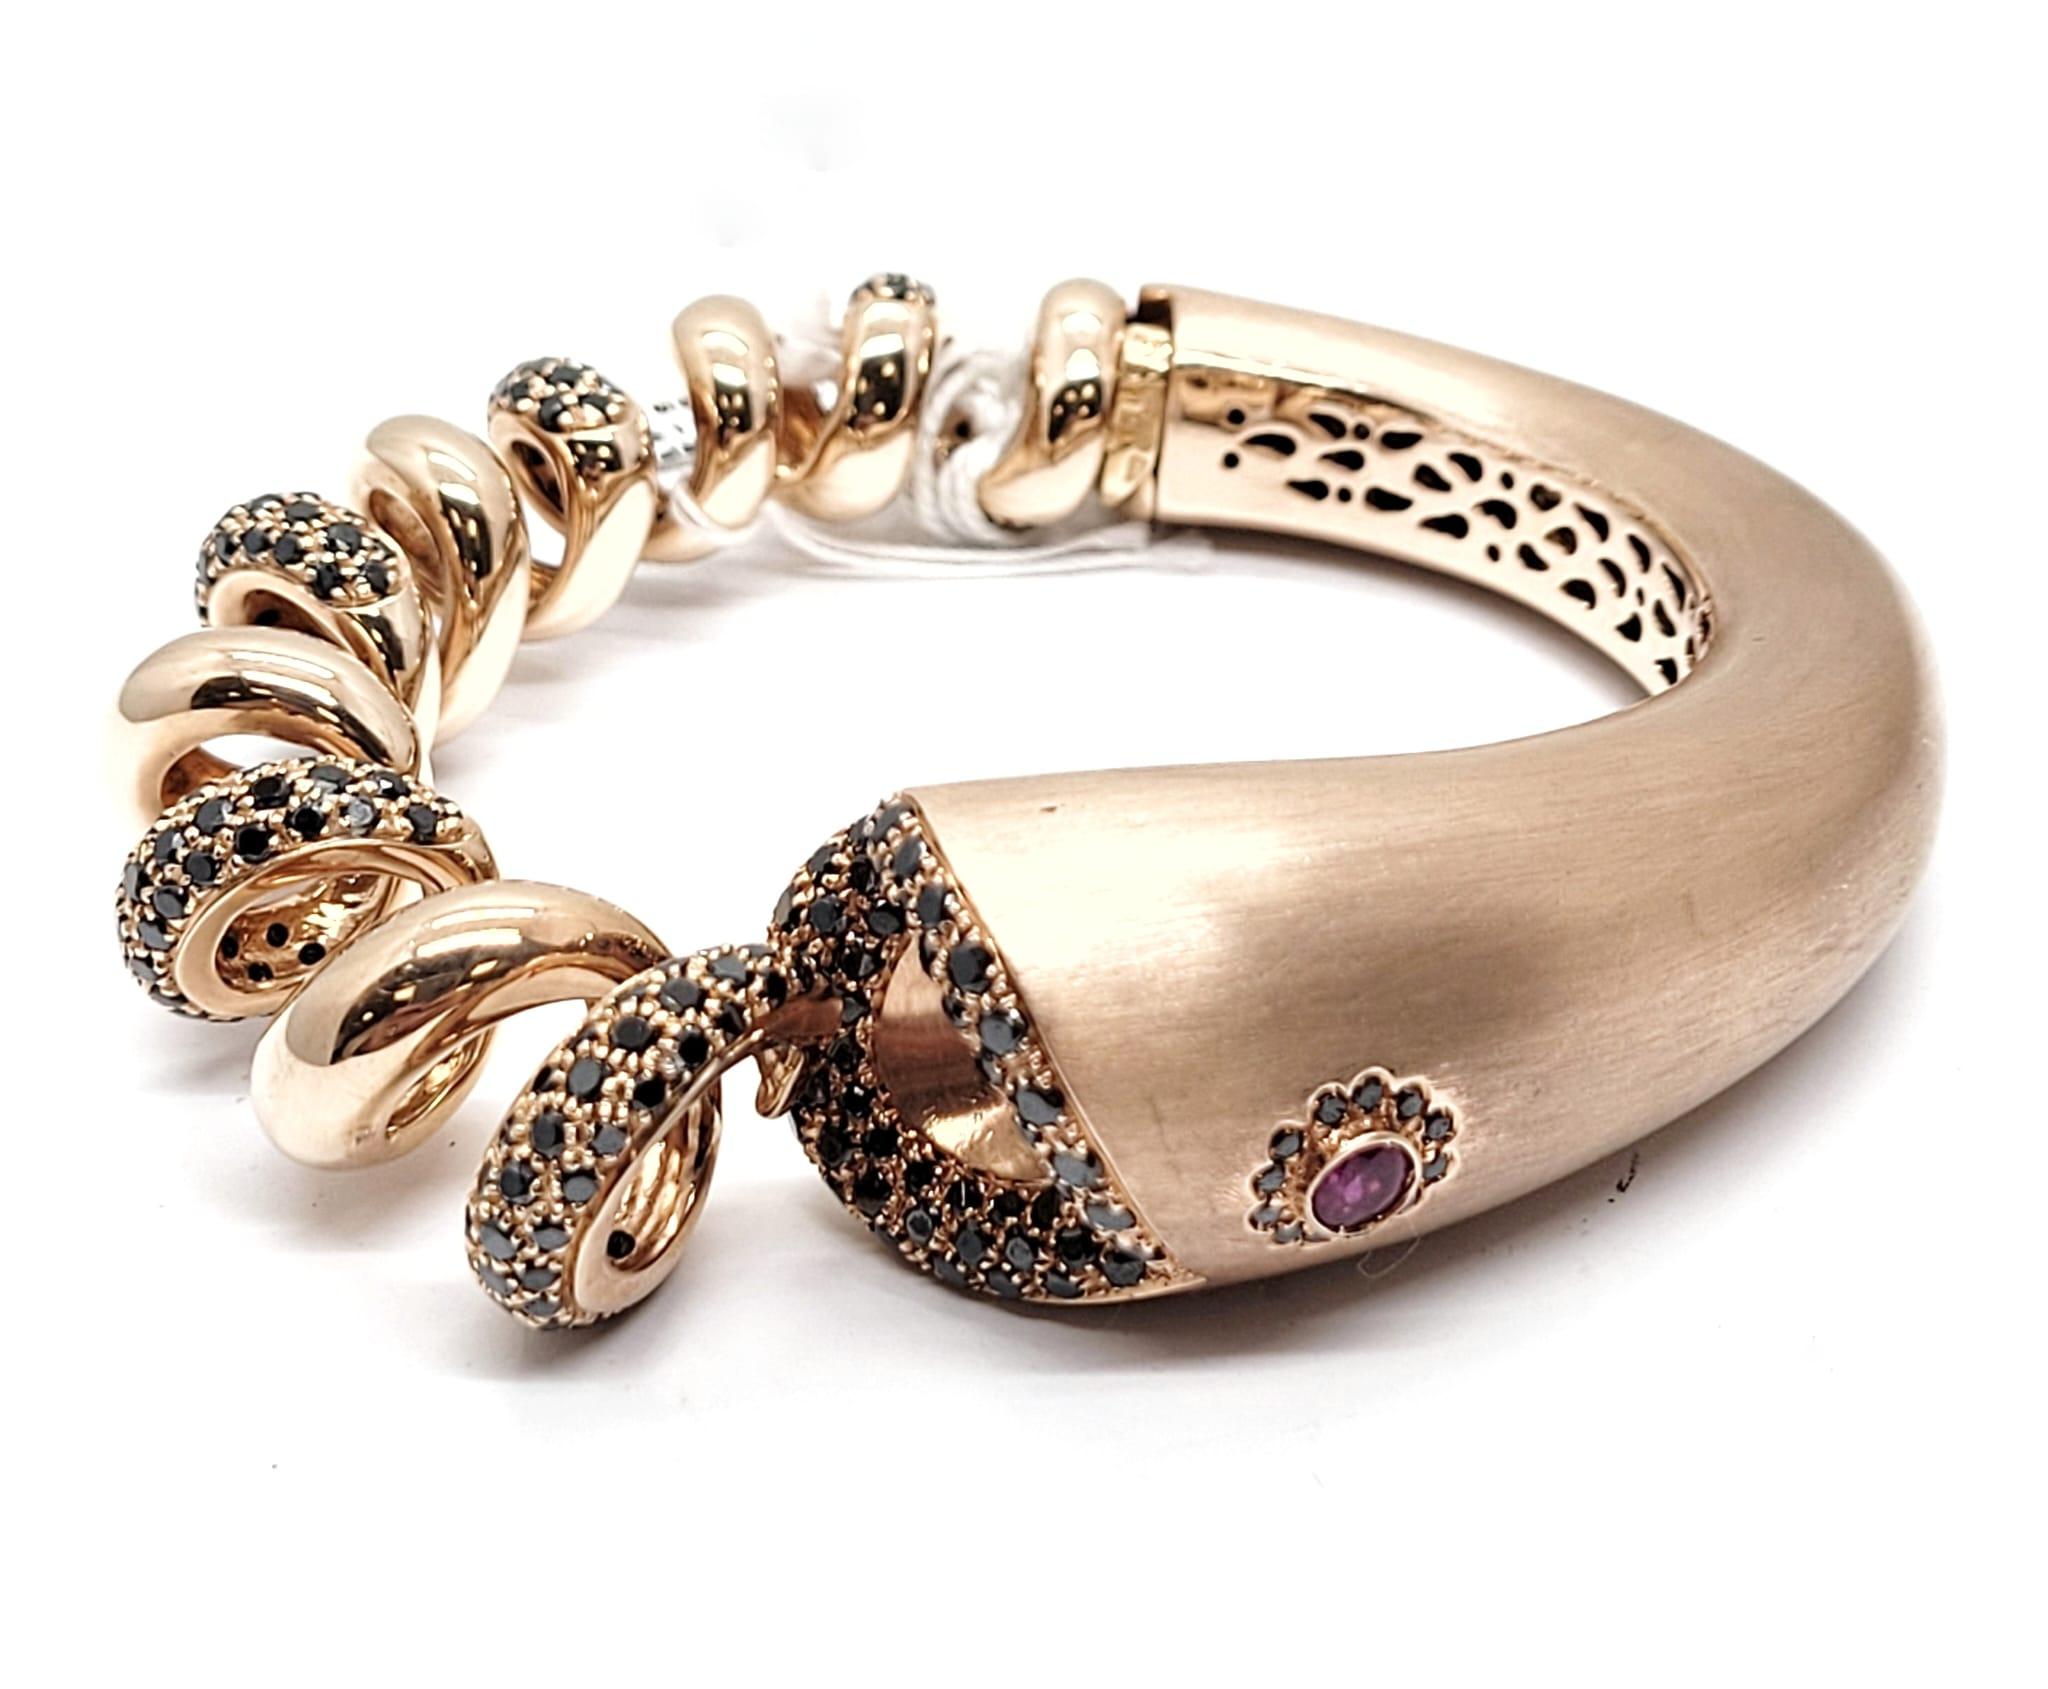 Andreoli Ruby Black Diamond 18 Karat Rose Gold Snake Bracelet

This bracelet features:
- 0.34 Carat Ruby 